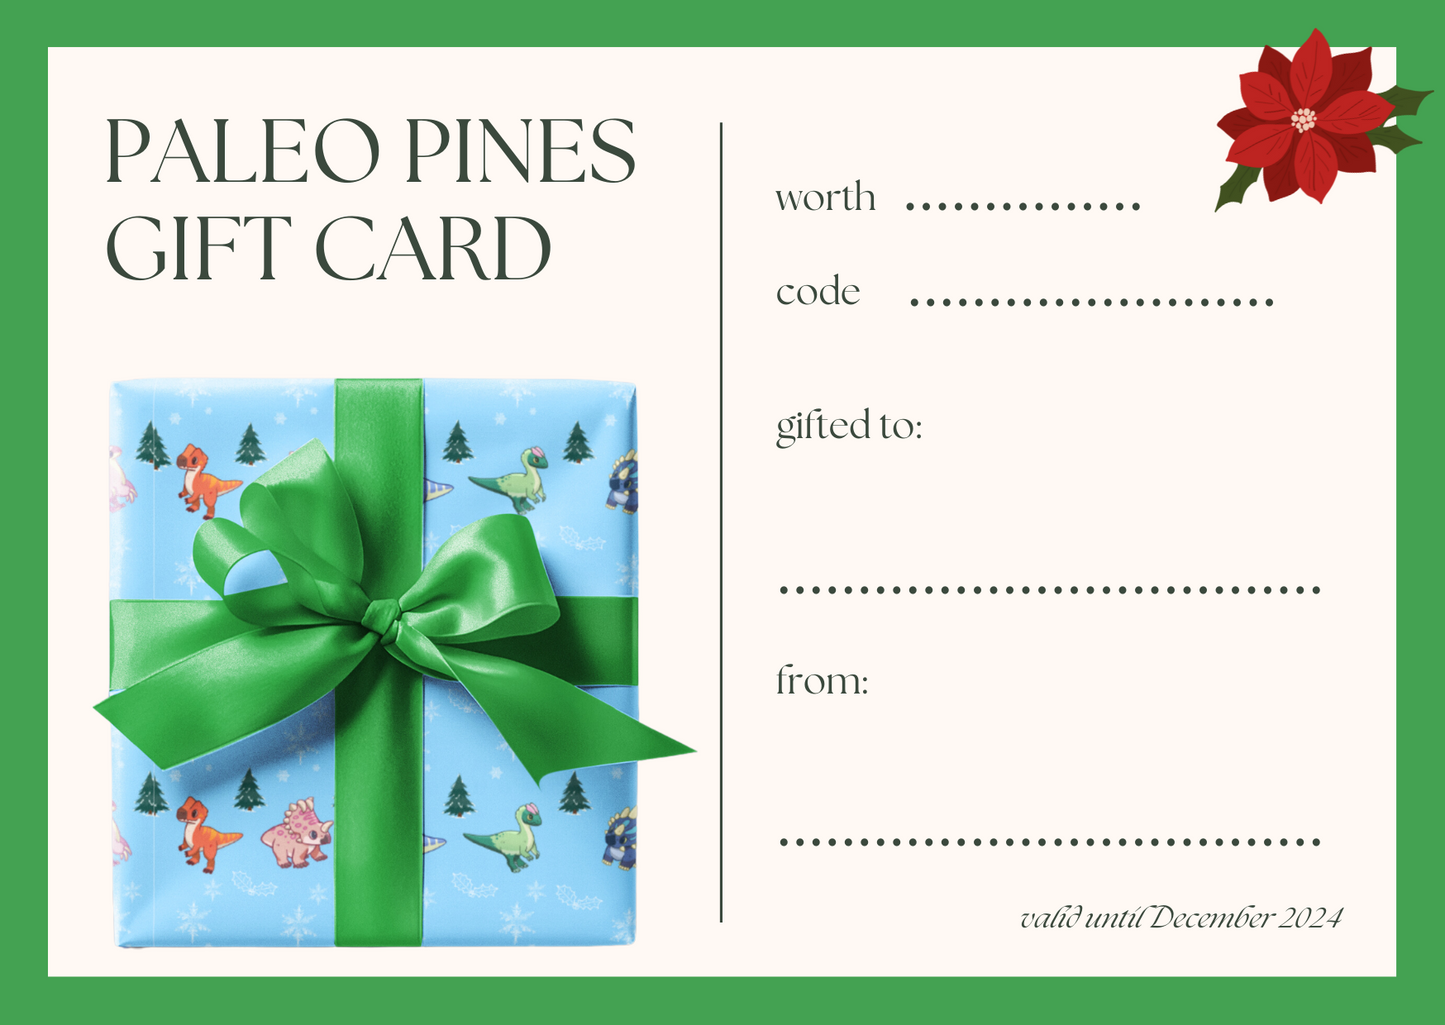 Paleo Pines Merchandise Gift Card